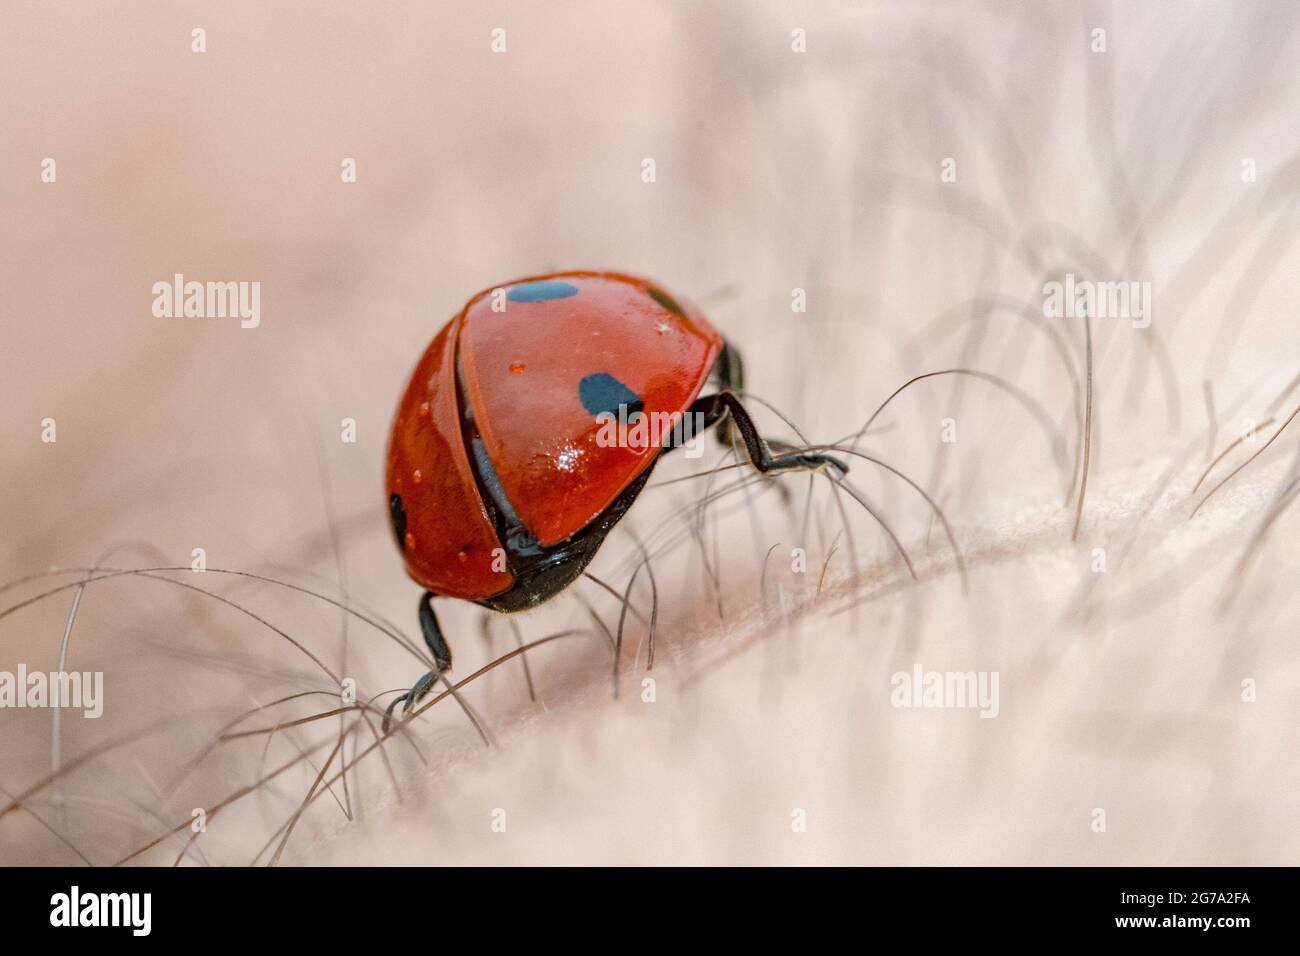 Ladybug cross hi-res stock photography and images - Alamy